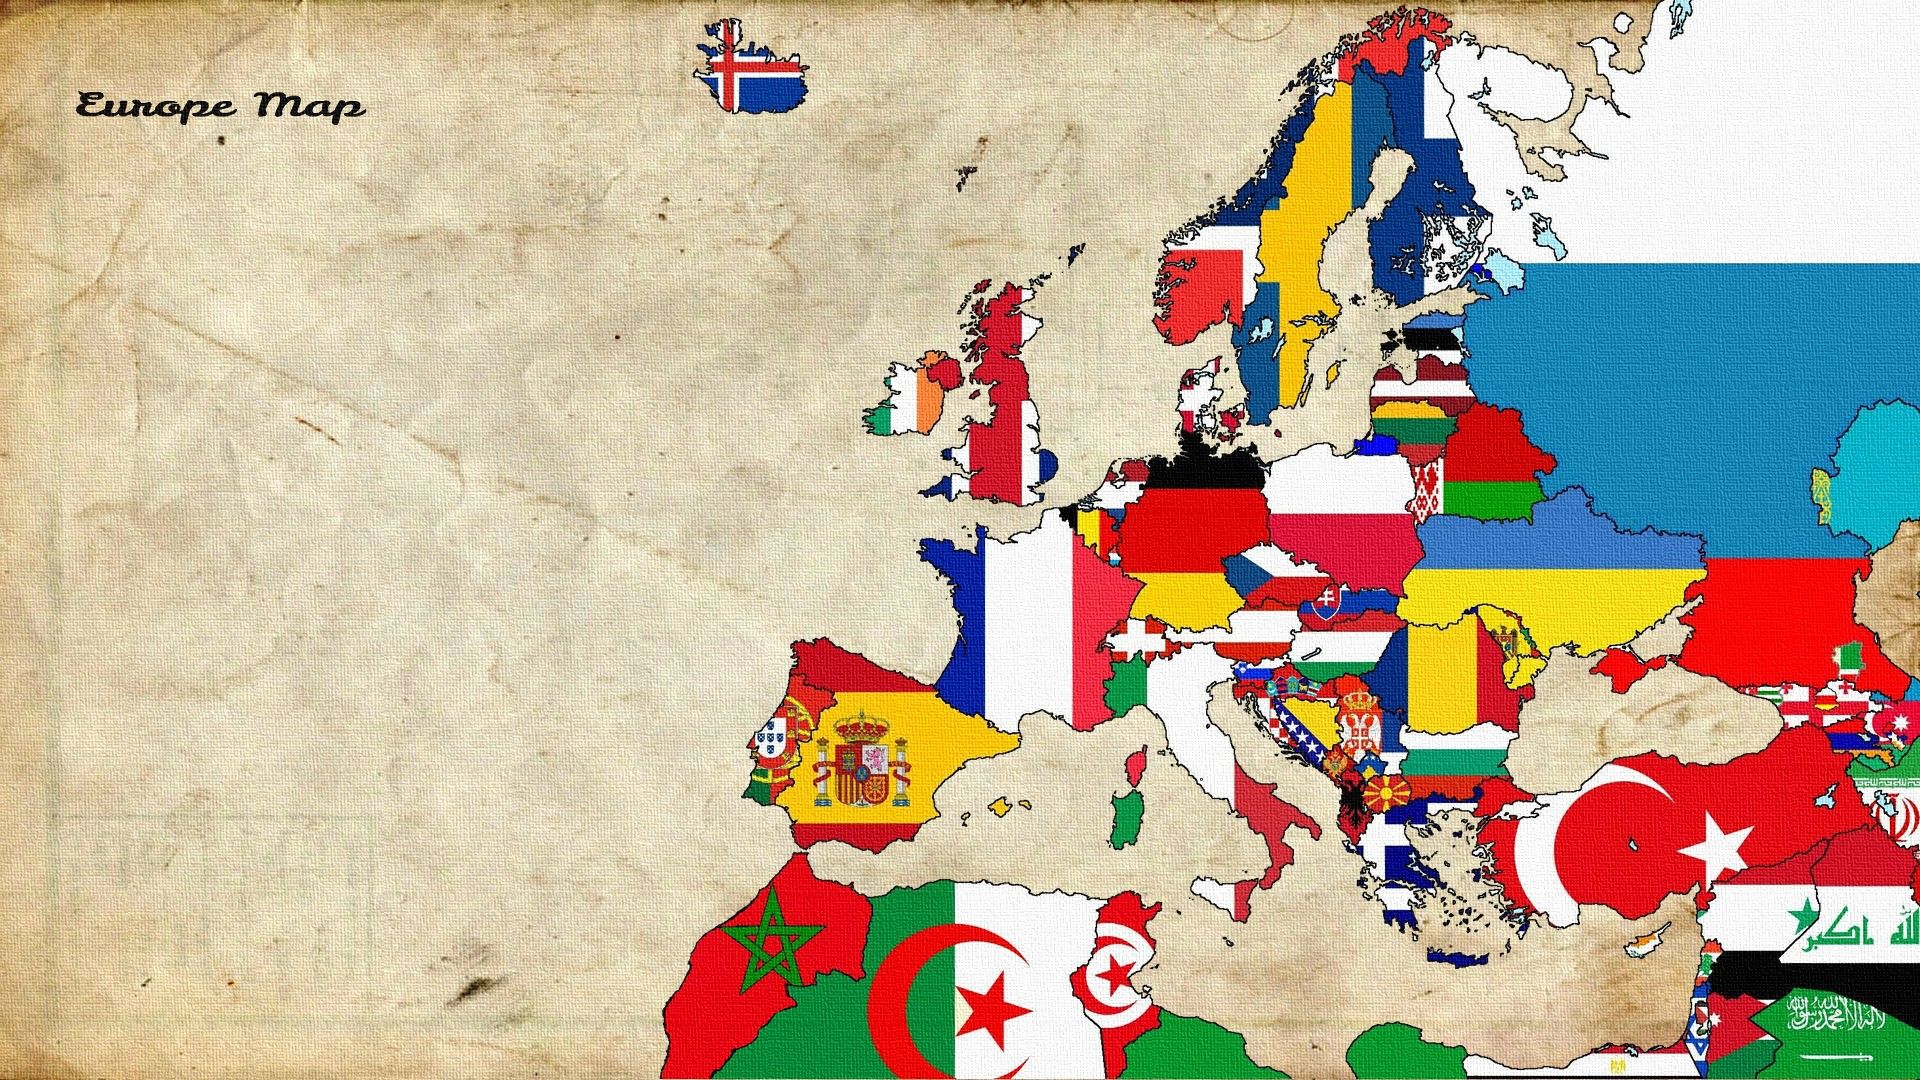 1920x1080 map europe old map flag wallpaper JPG 828 kB